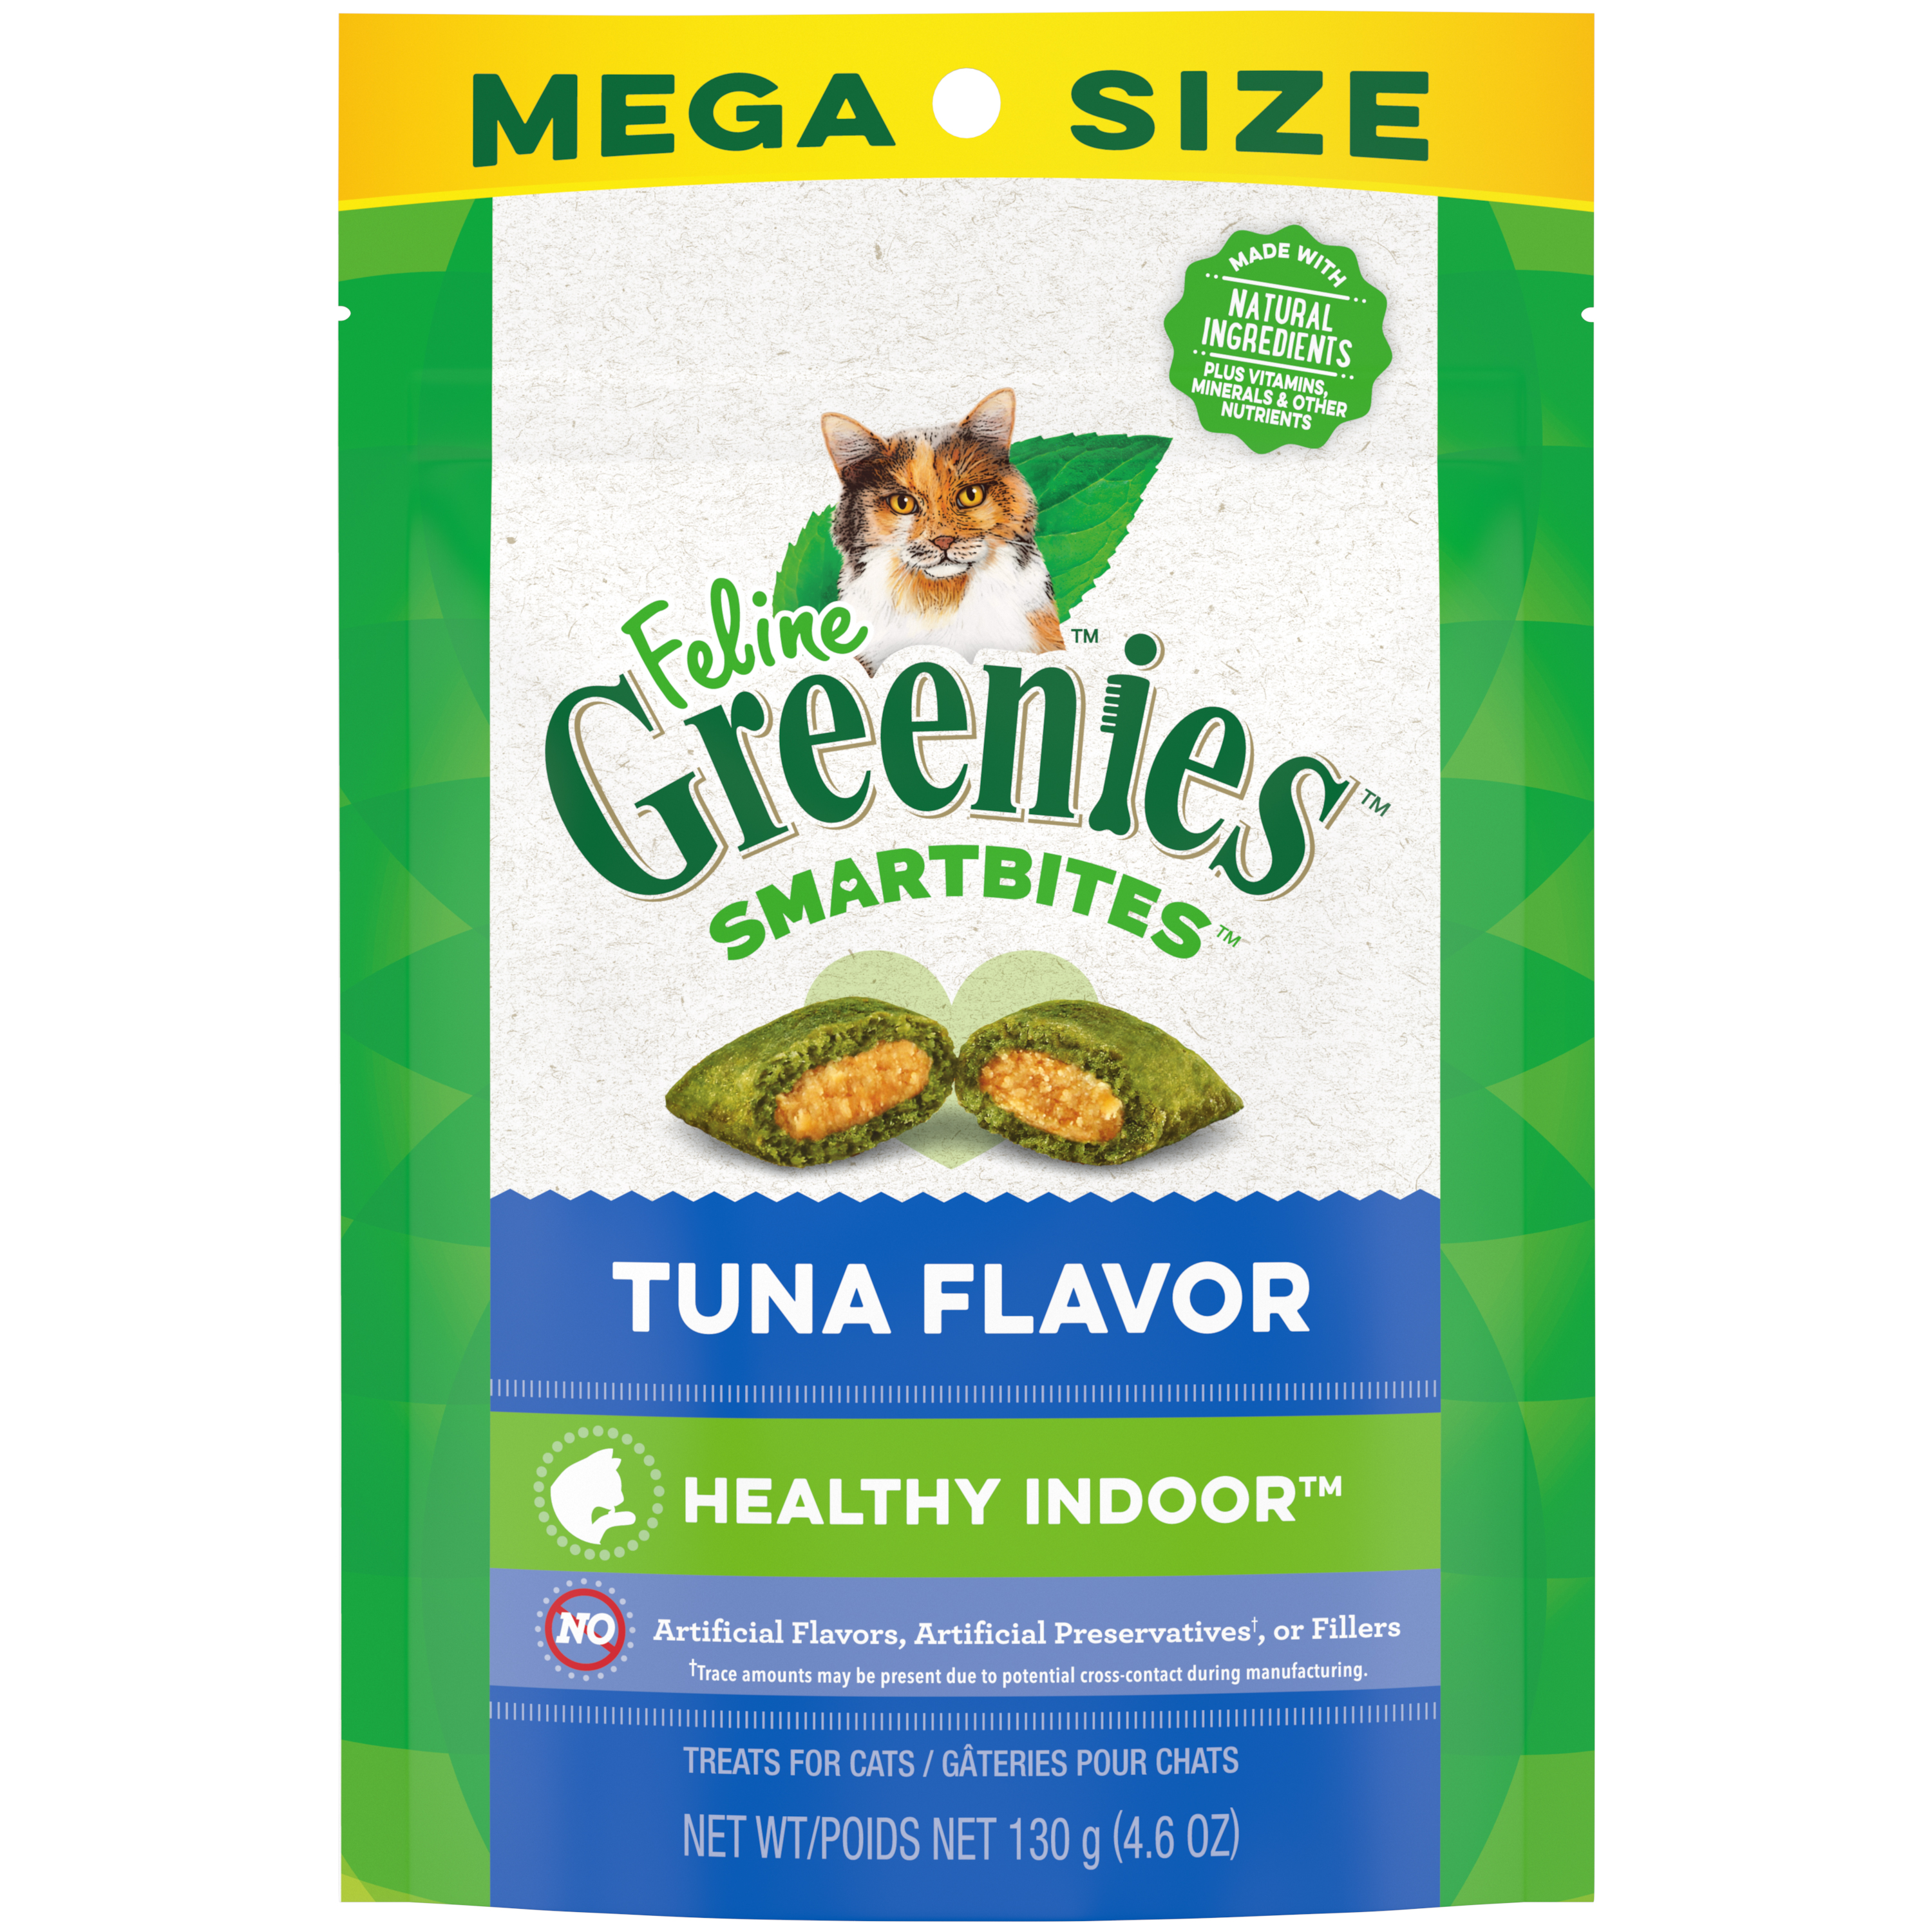 4.6 oz. Greenies Feline Smartbites Hairball Control Tuna - Health/First Aid